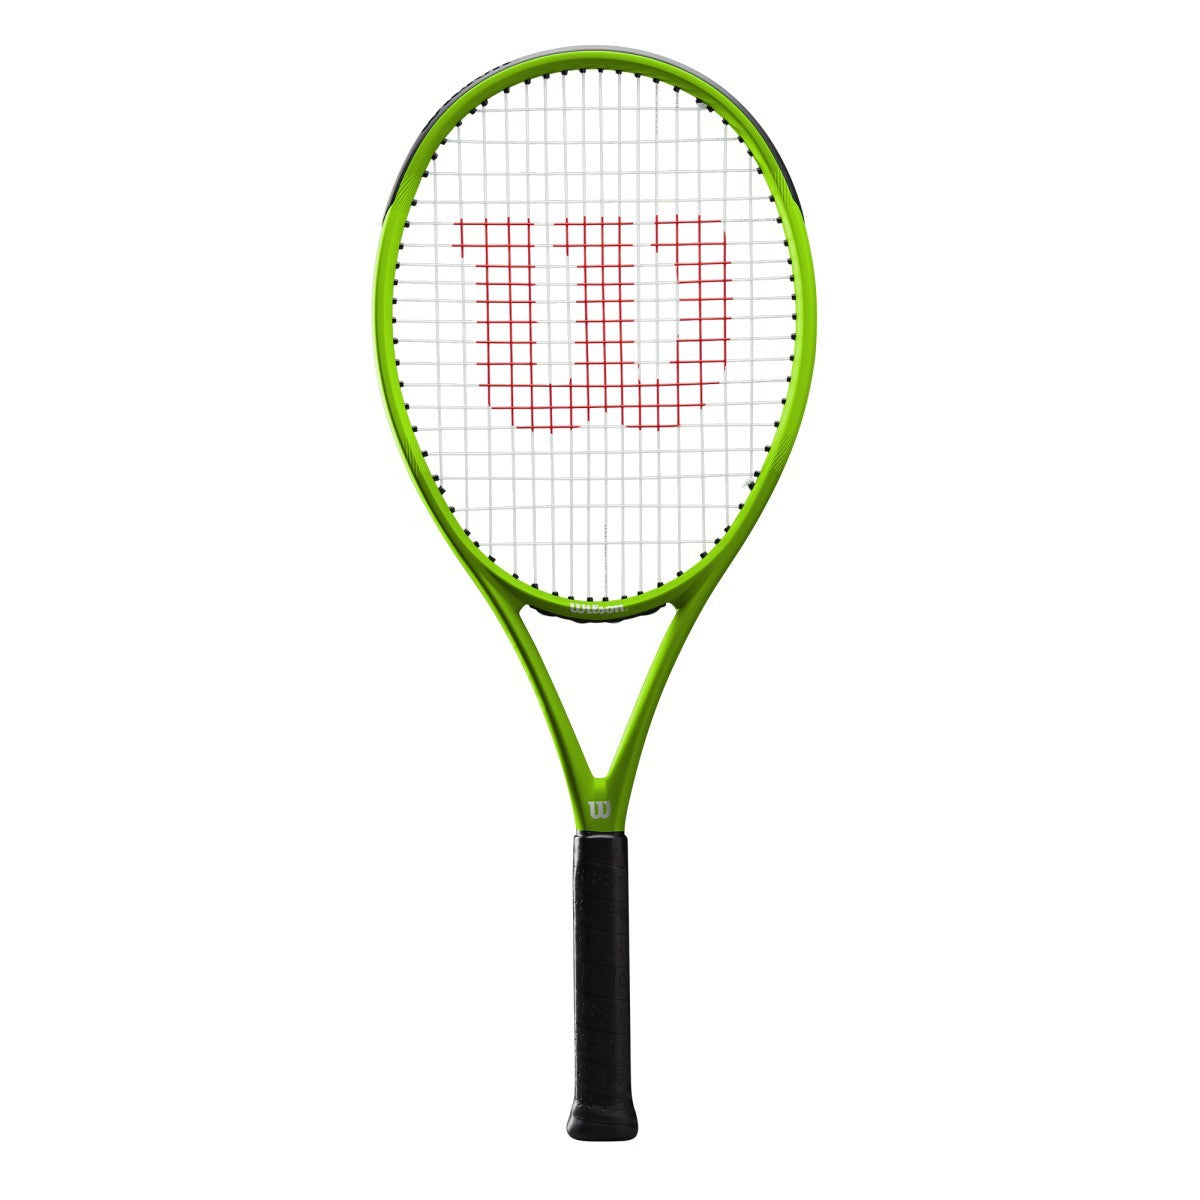 Wilson Blade Feel Pro 105 Tennis Racket- Green